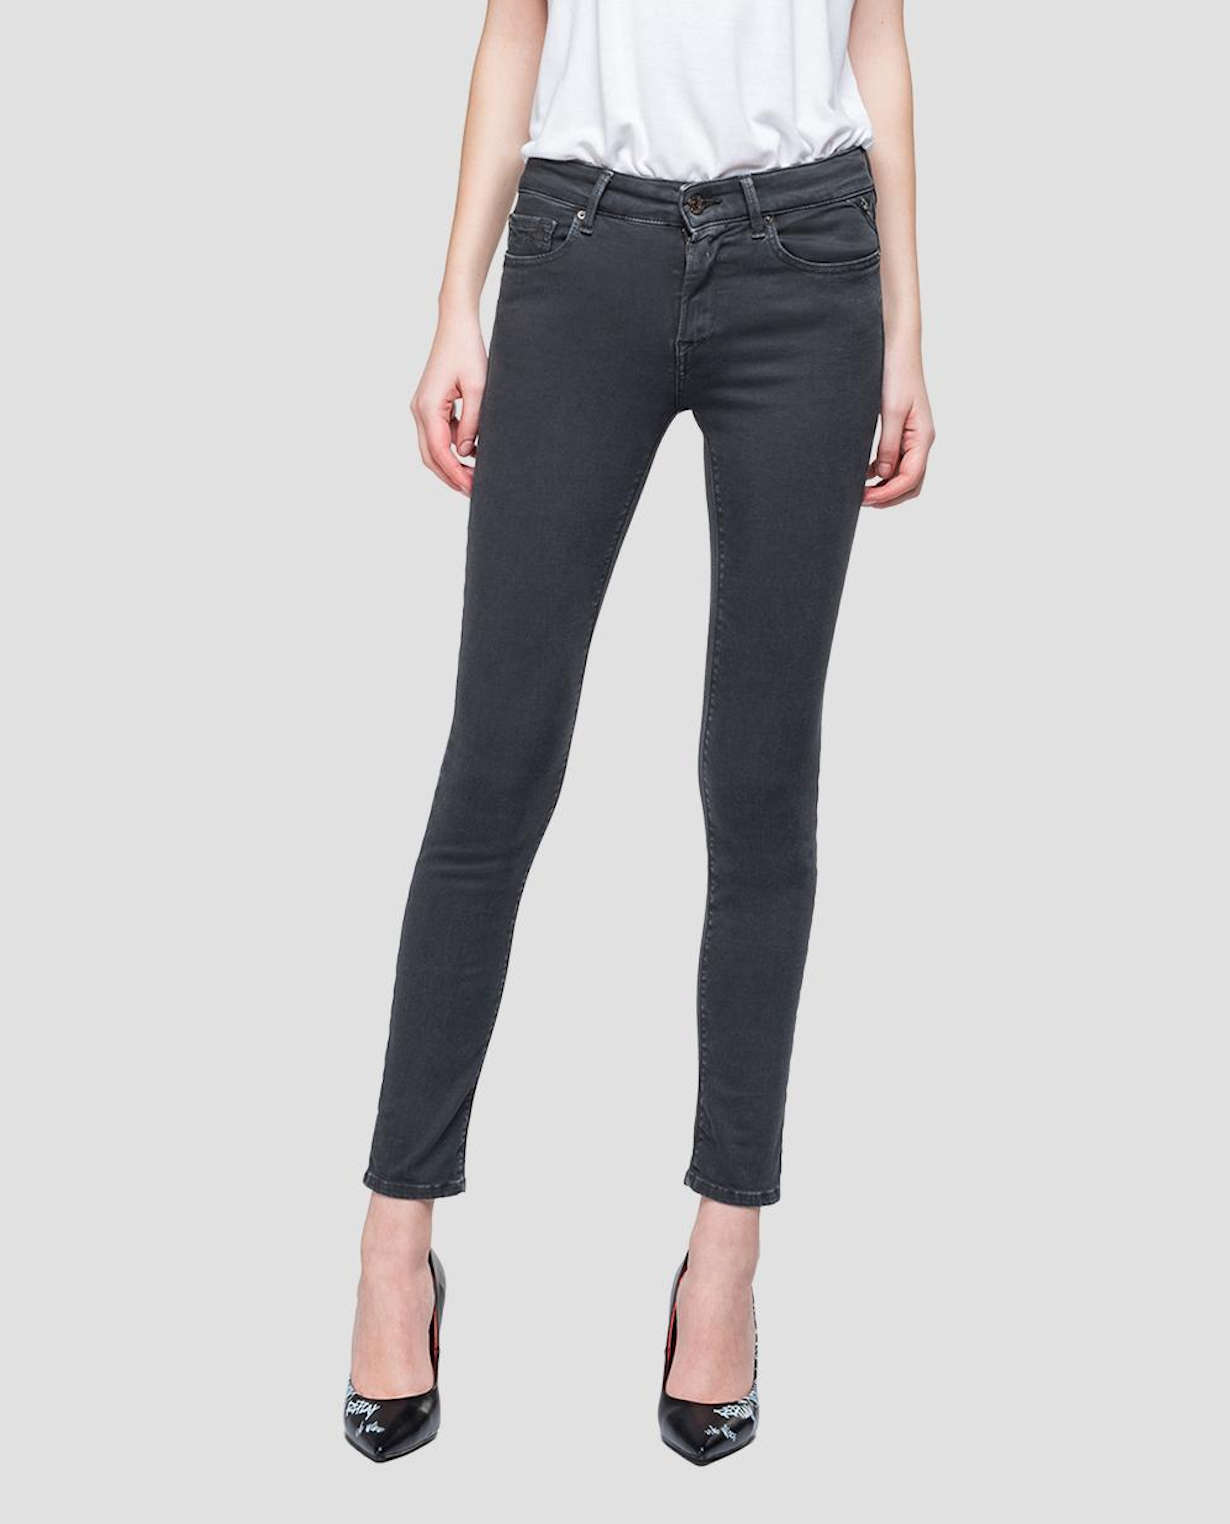 Buy Replay New Luz Hyperflex Jeans Black - Scandinavian Fashion Store